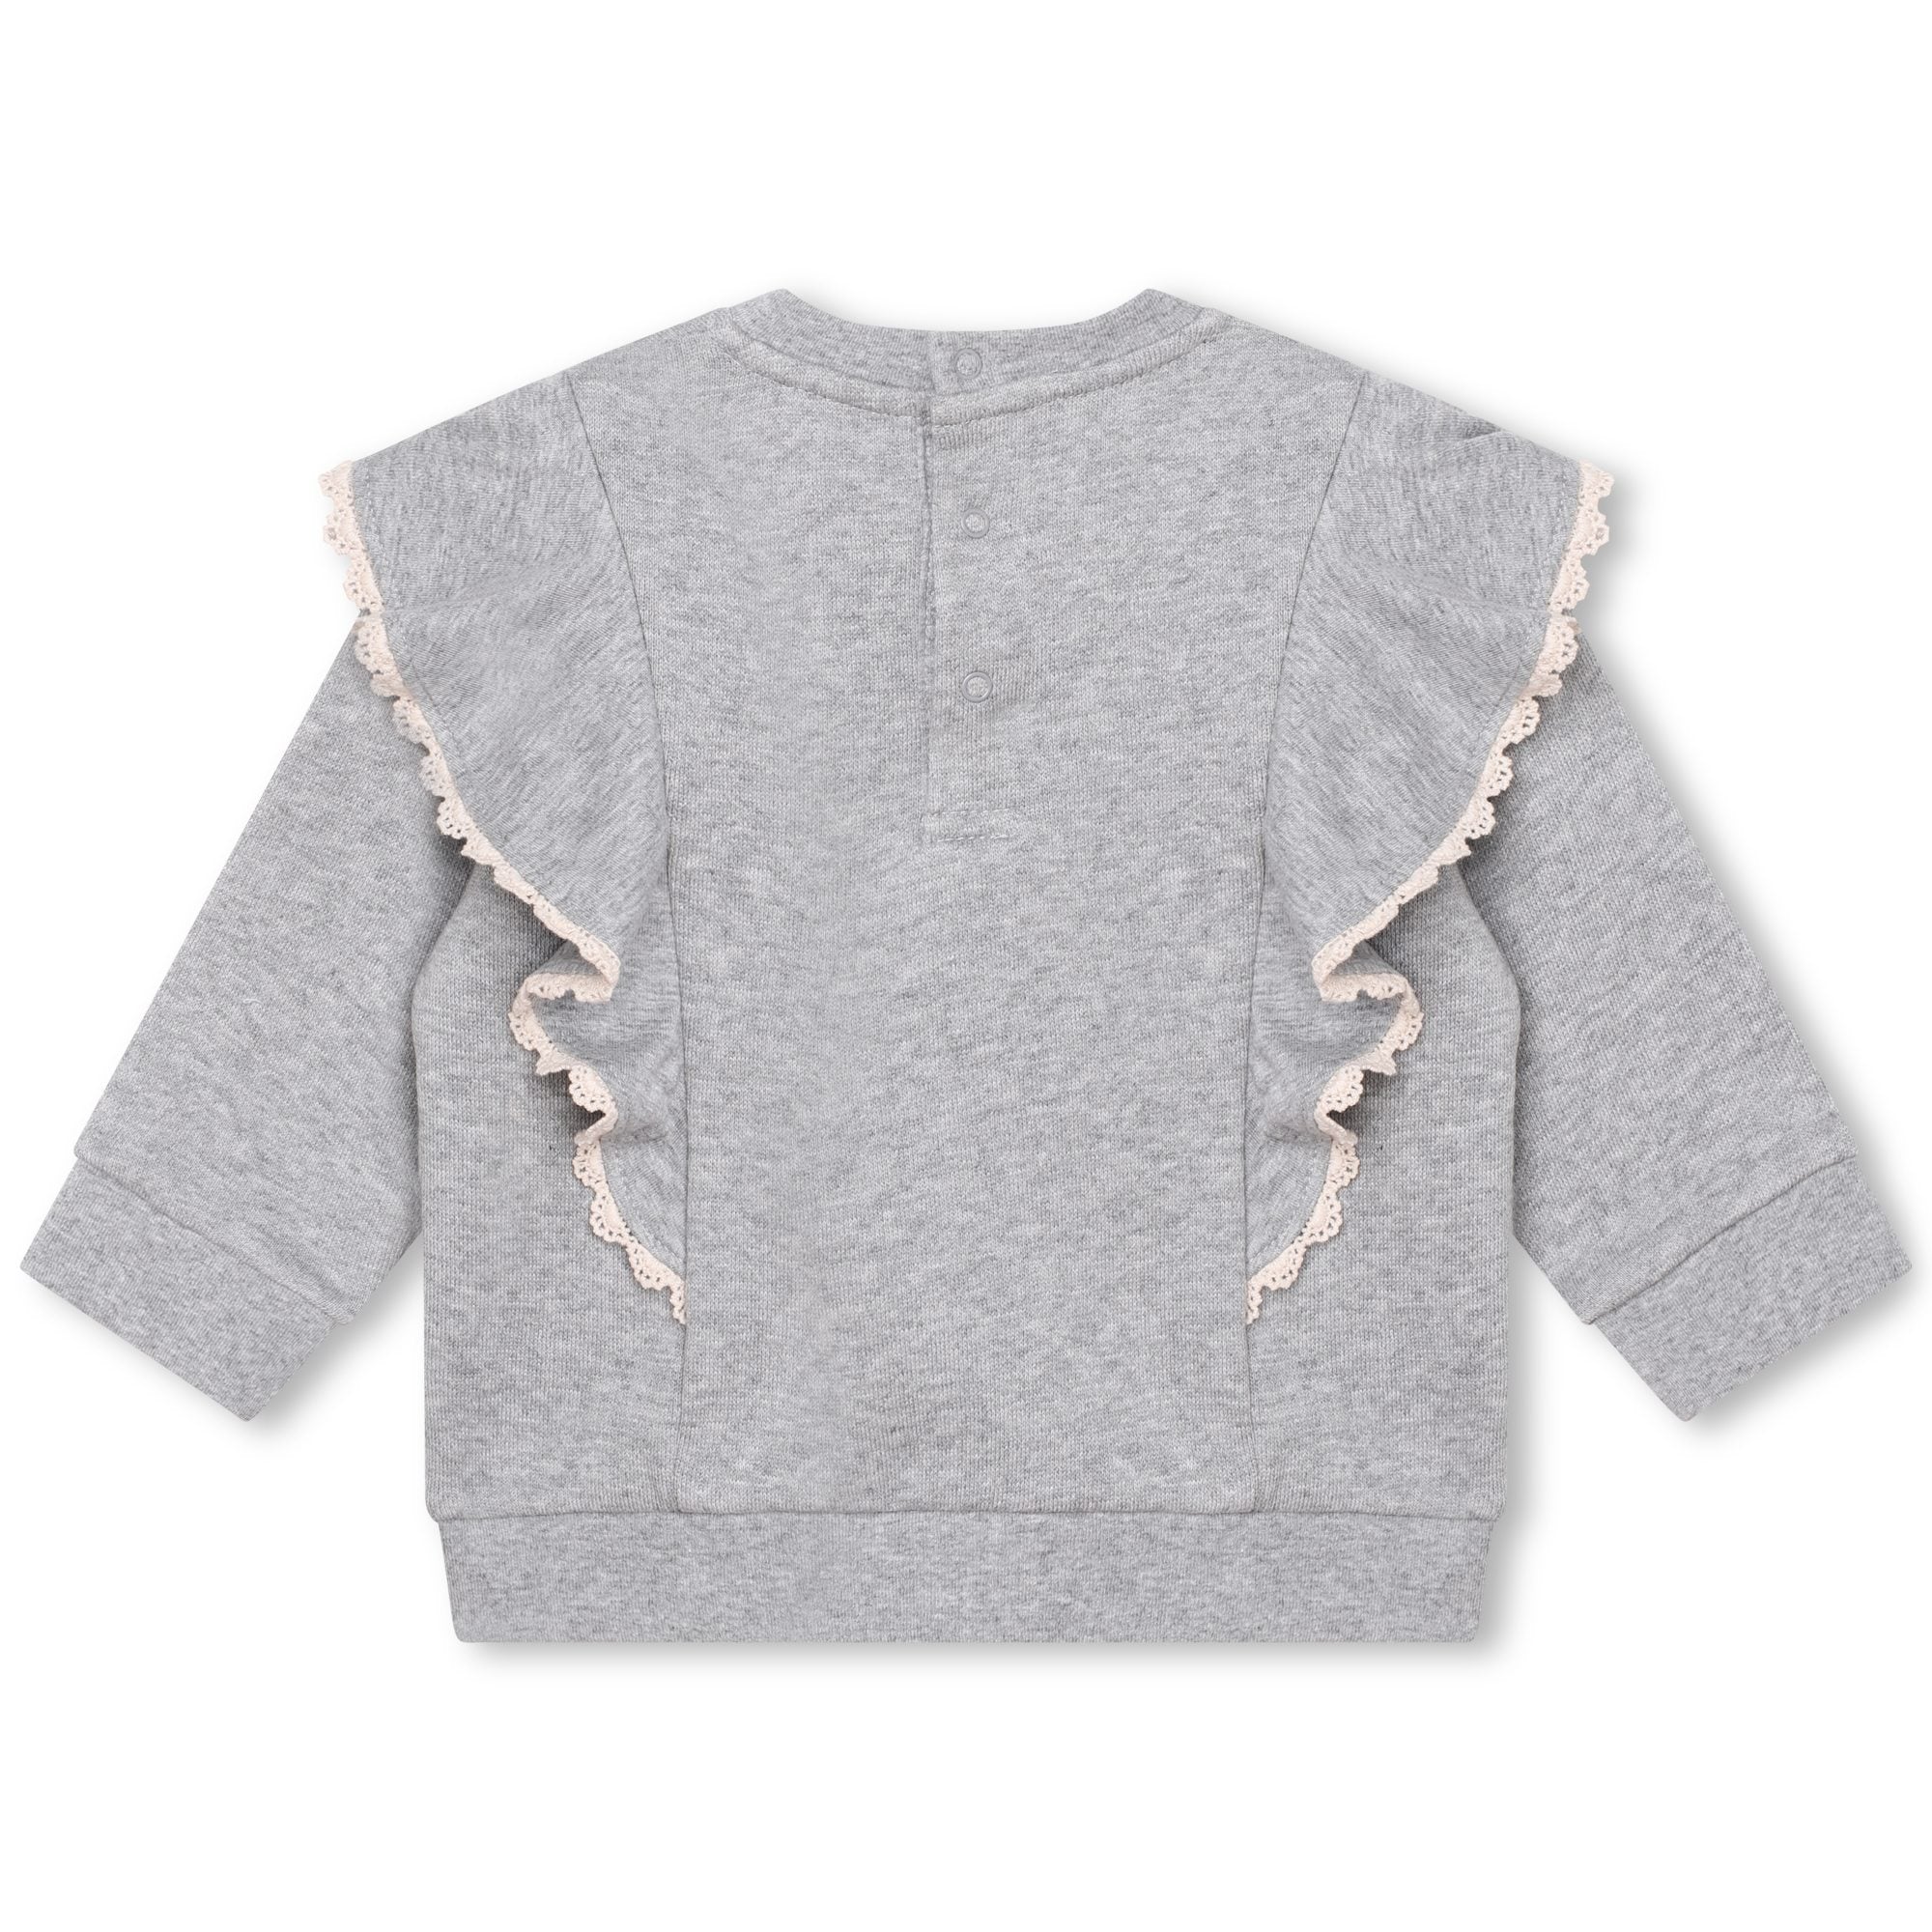 Chloe Baby Girls Ruffled Sweater in Grey